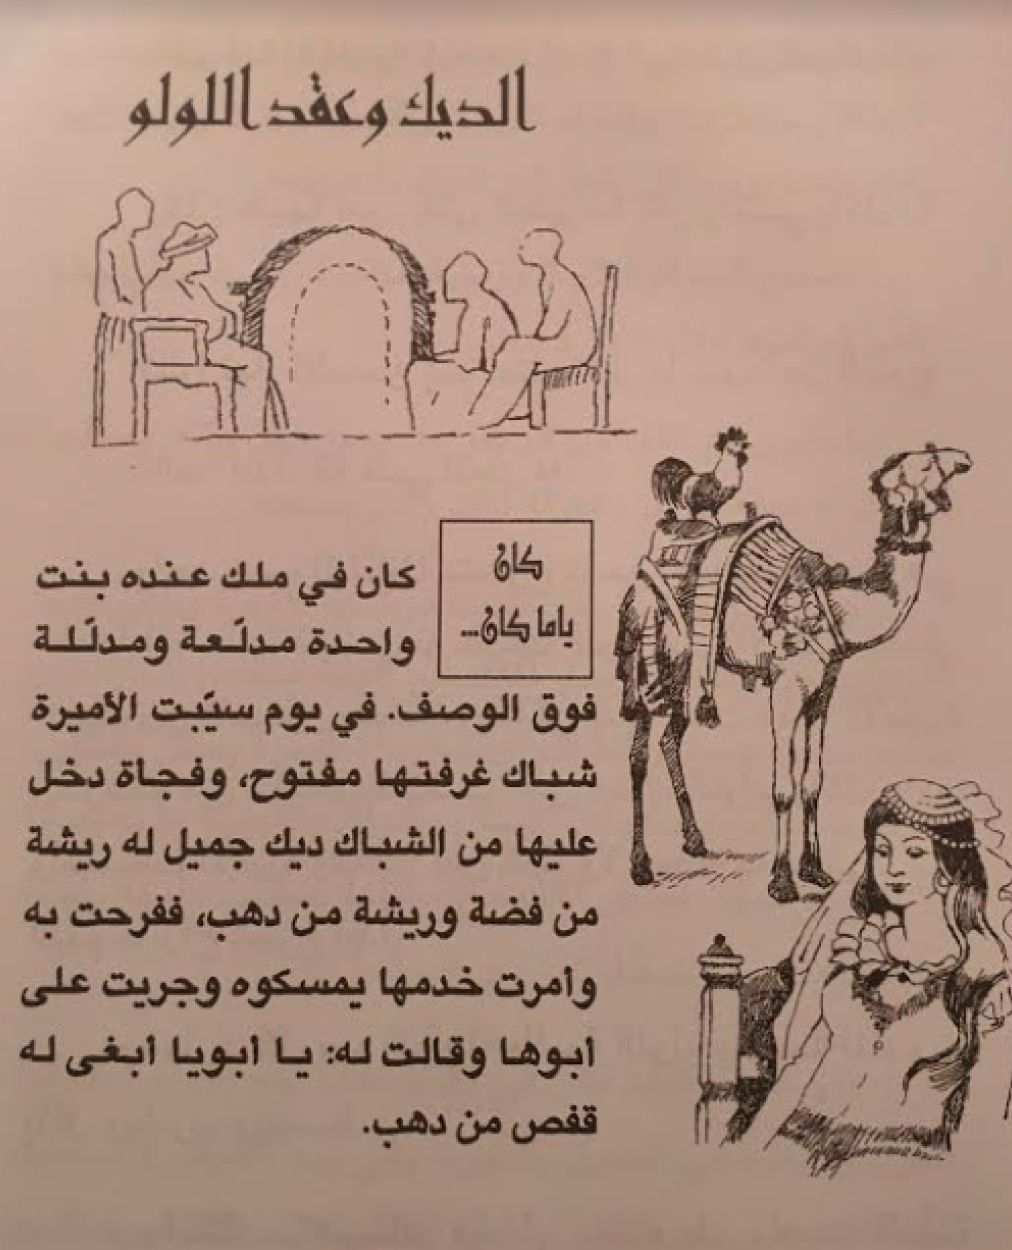 Timeless saudi folktales - Ithraeyat - Ithra